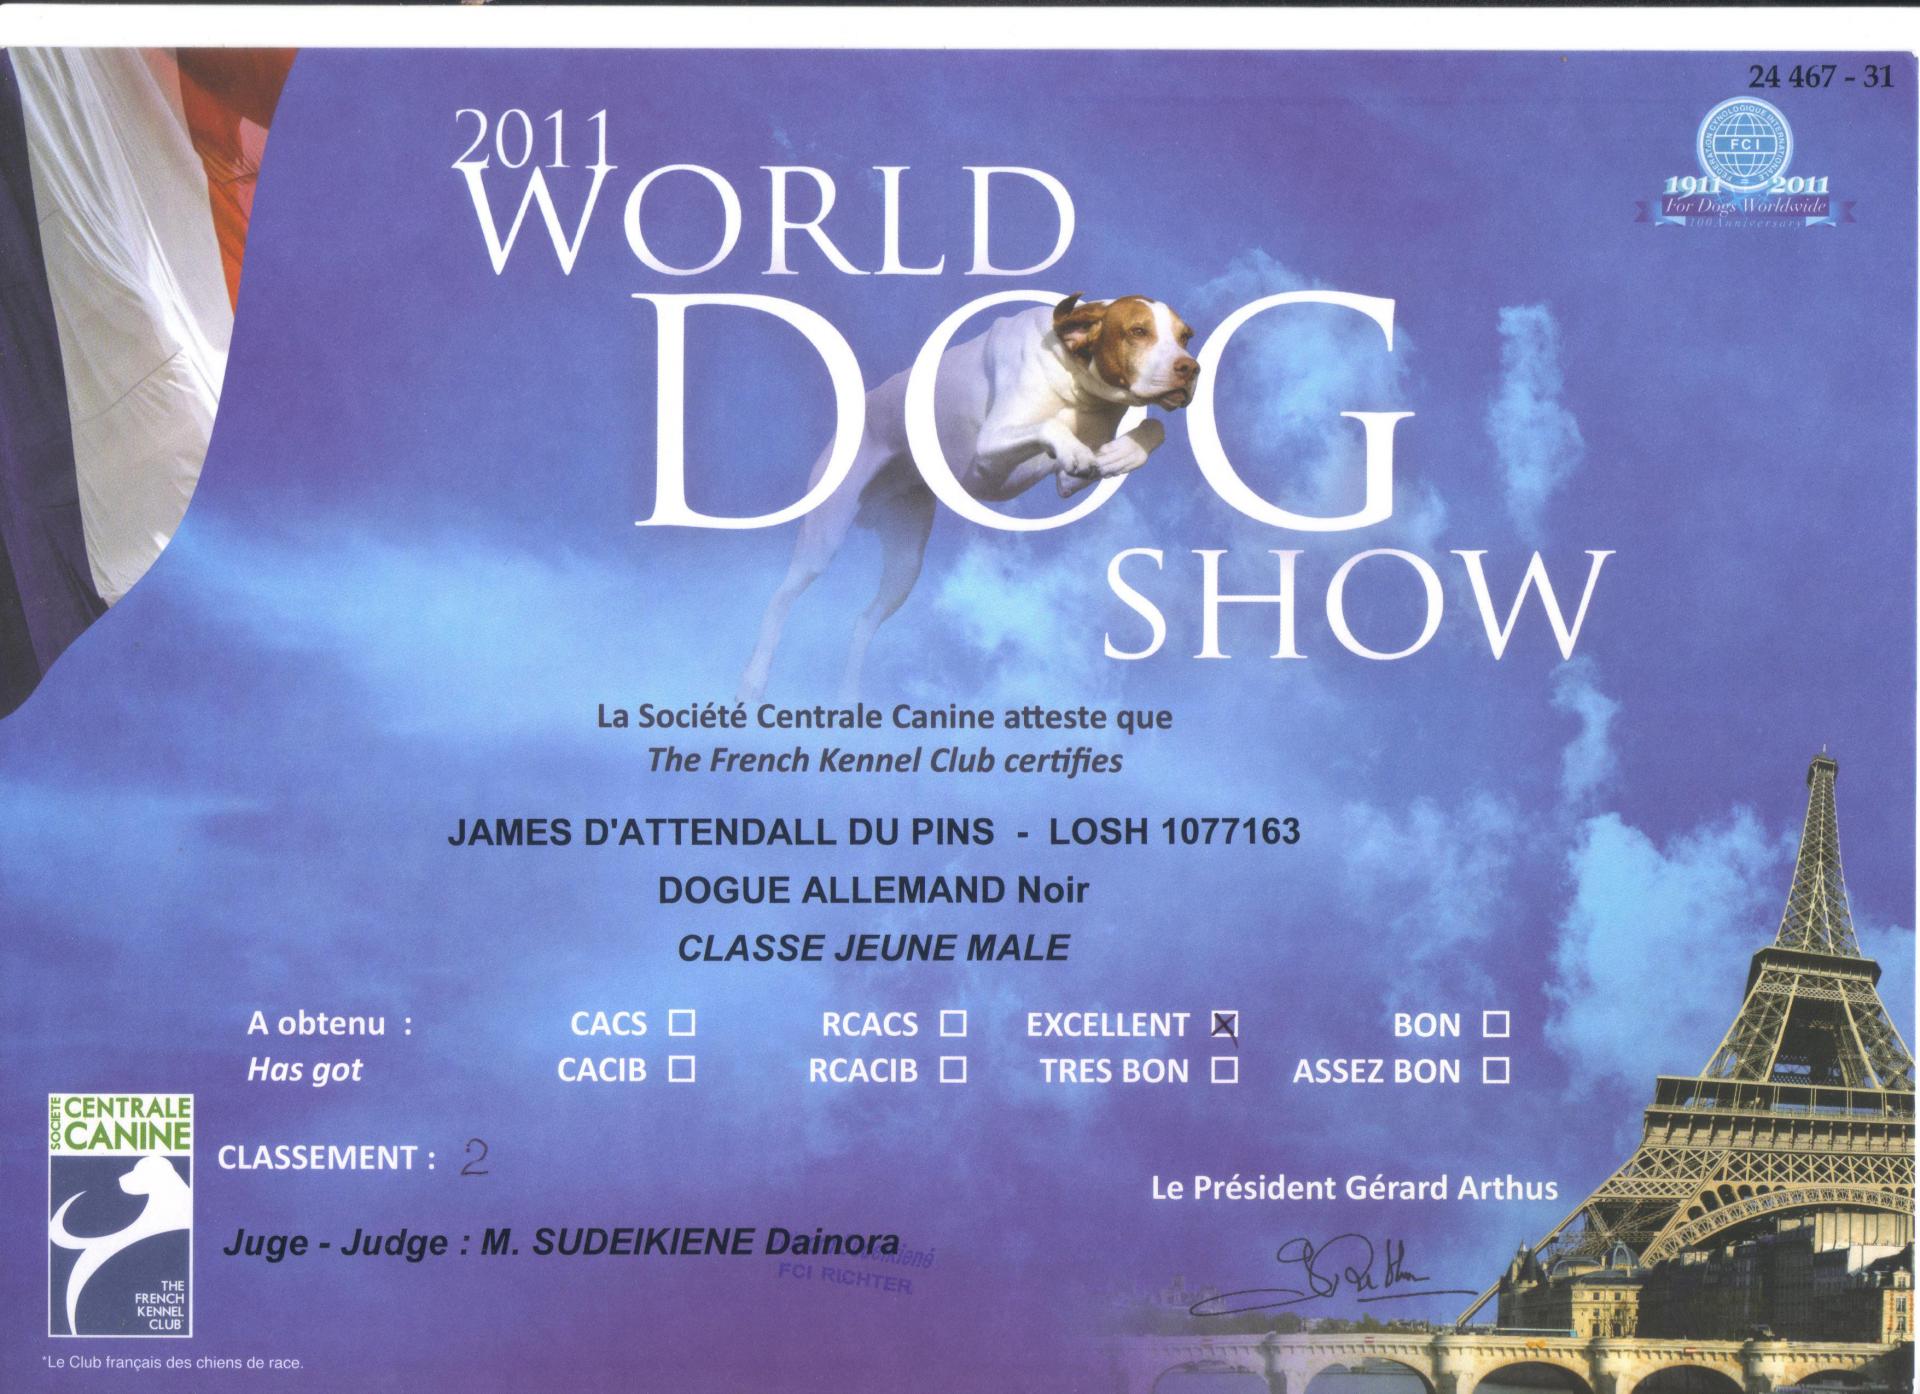 James world dog2011 001